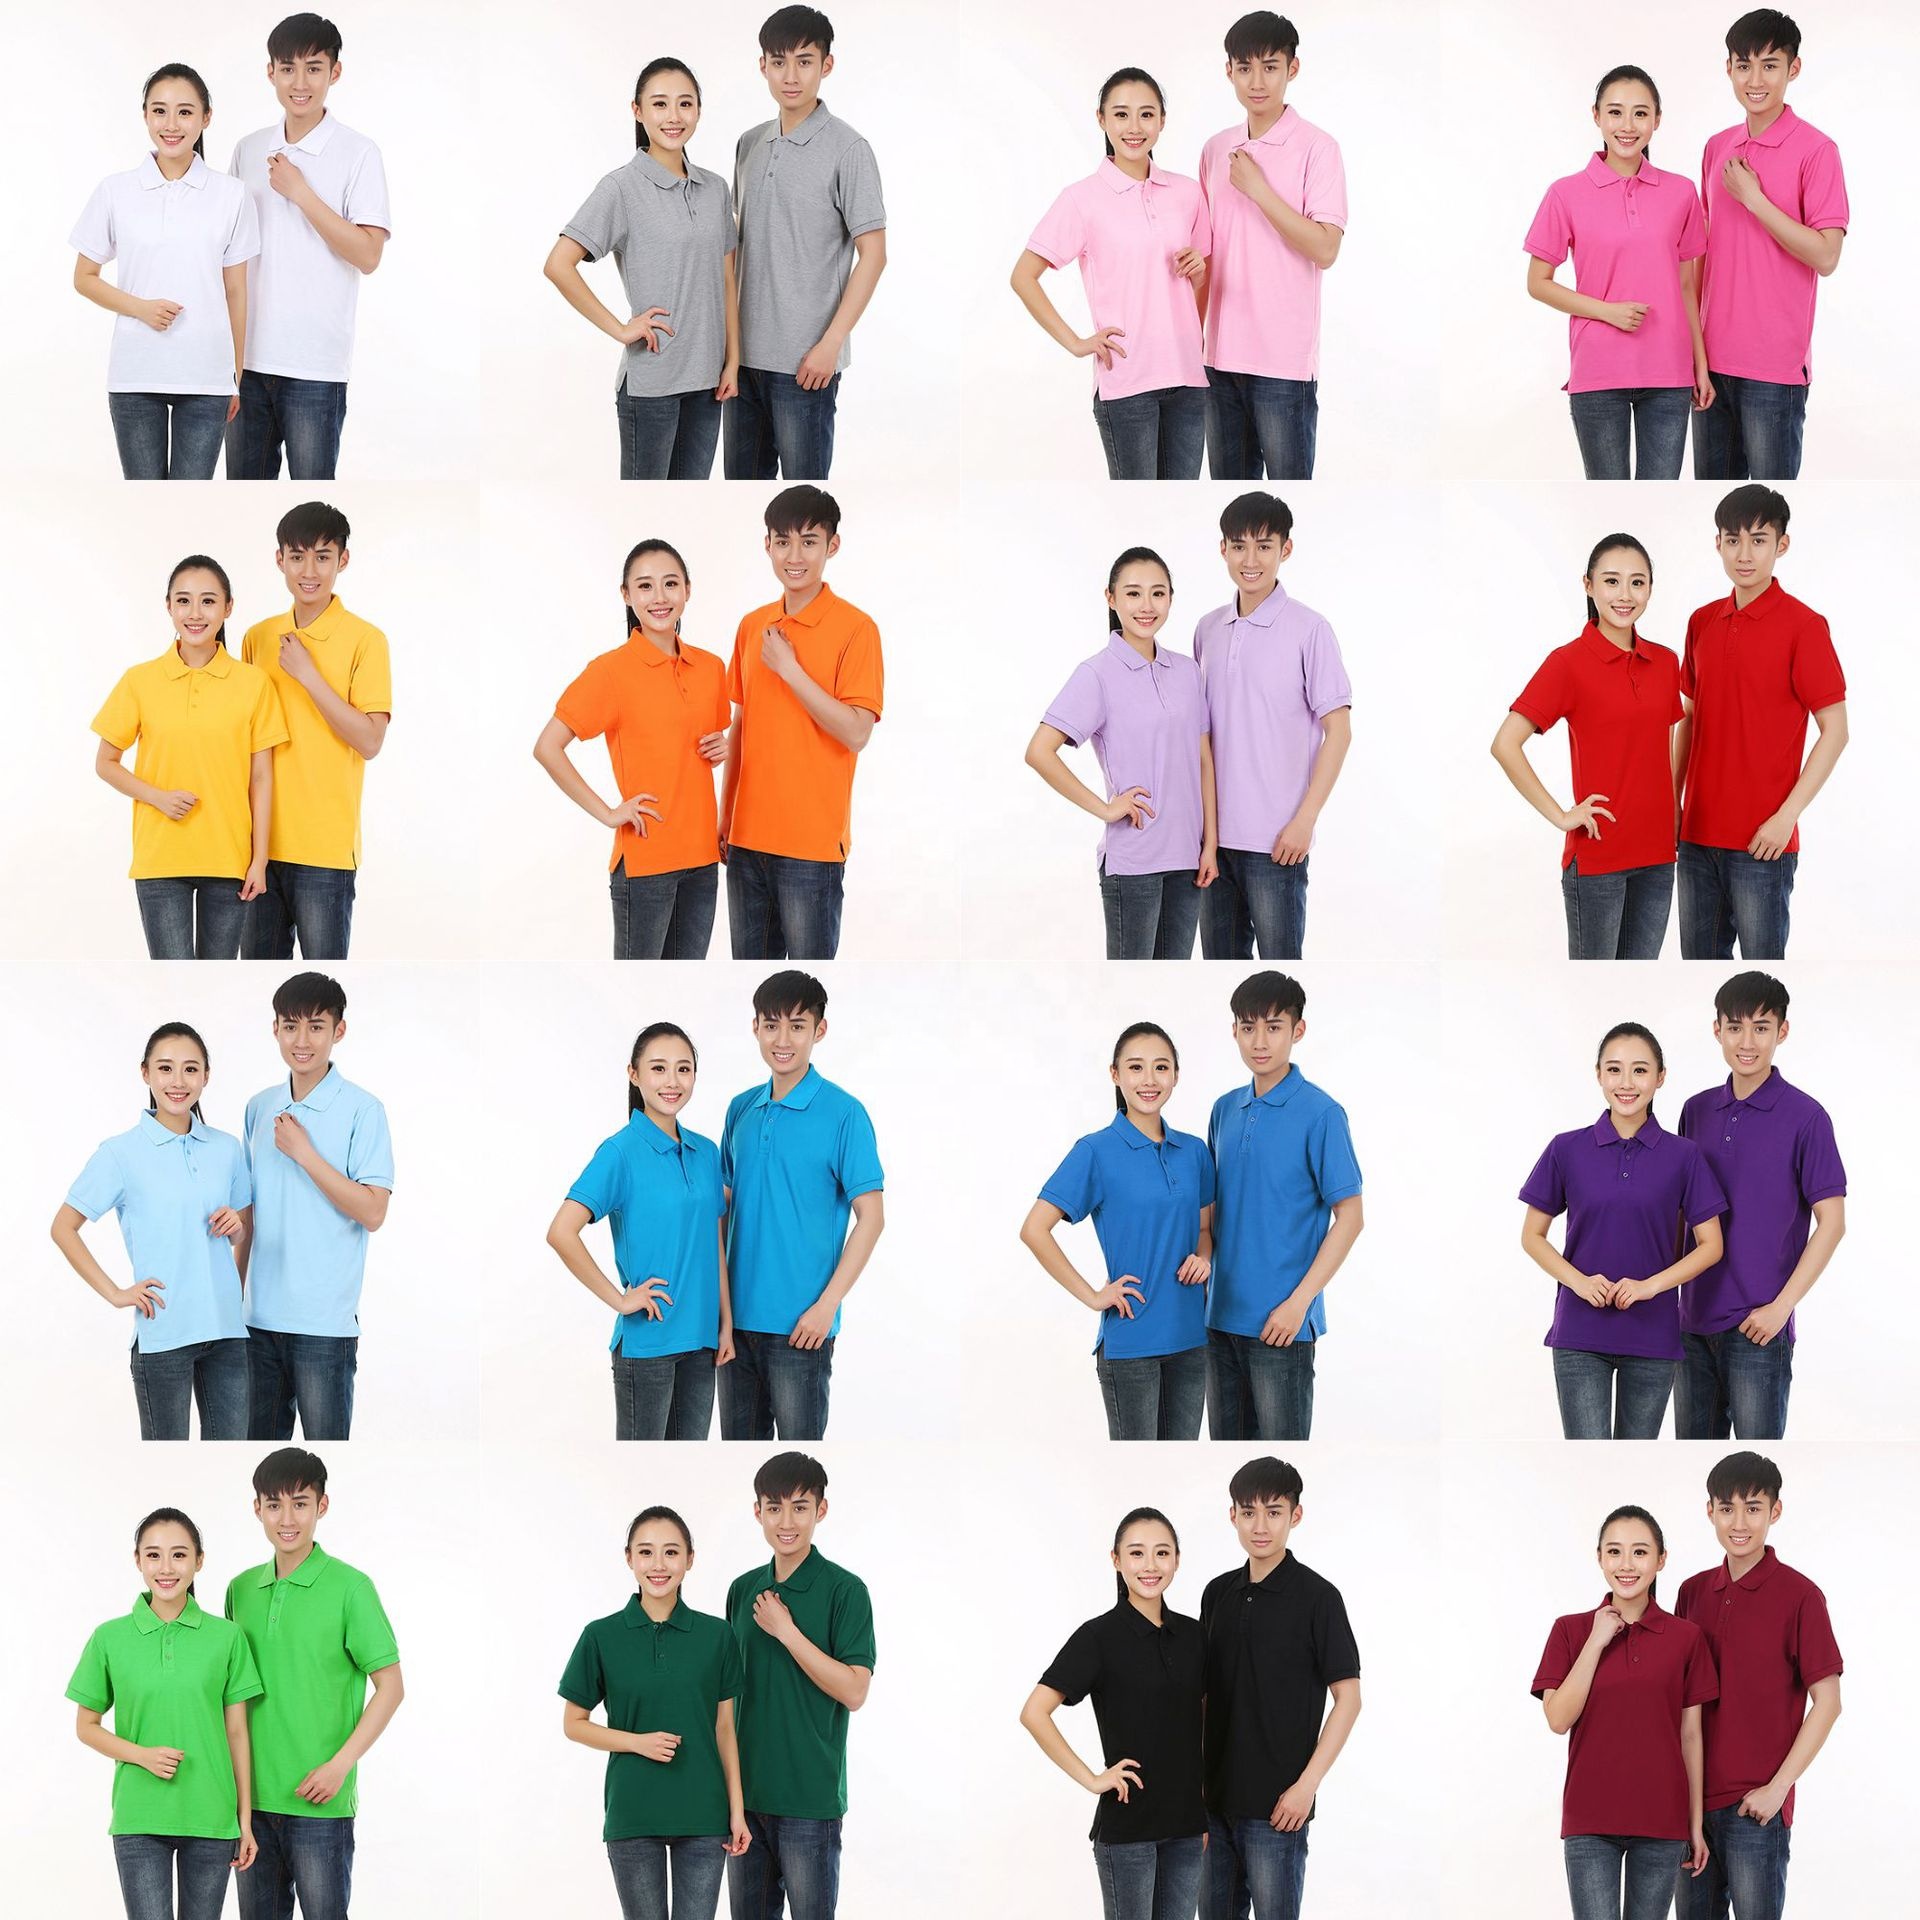 Premium quality colorful polo shirt designs cotton pique fabric 6xl 5xl 4xl 3xl 2xl xl l m s custom logo brand name polo shirts